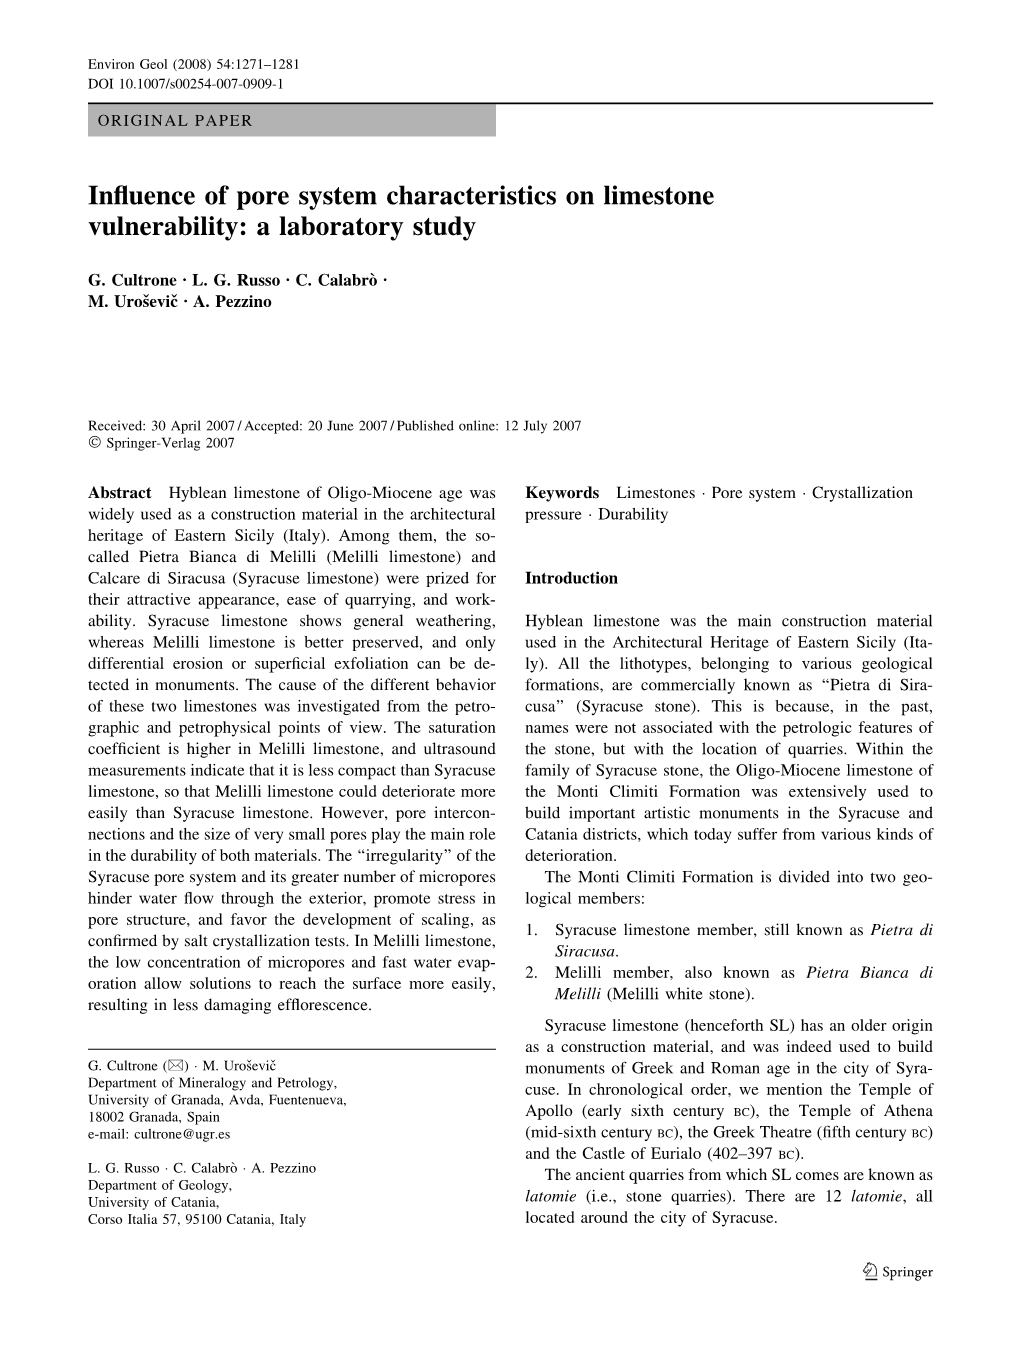 Influence of Pore System Characteristics on Limestone